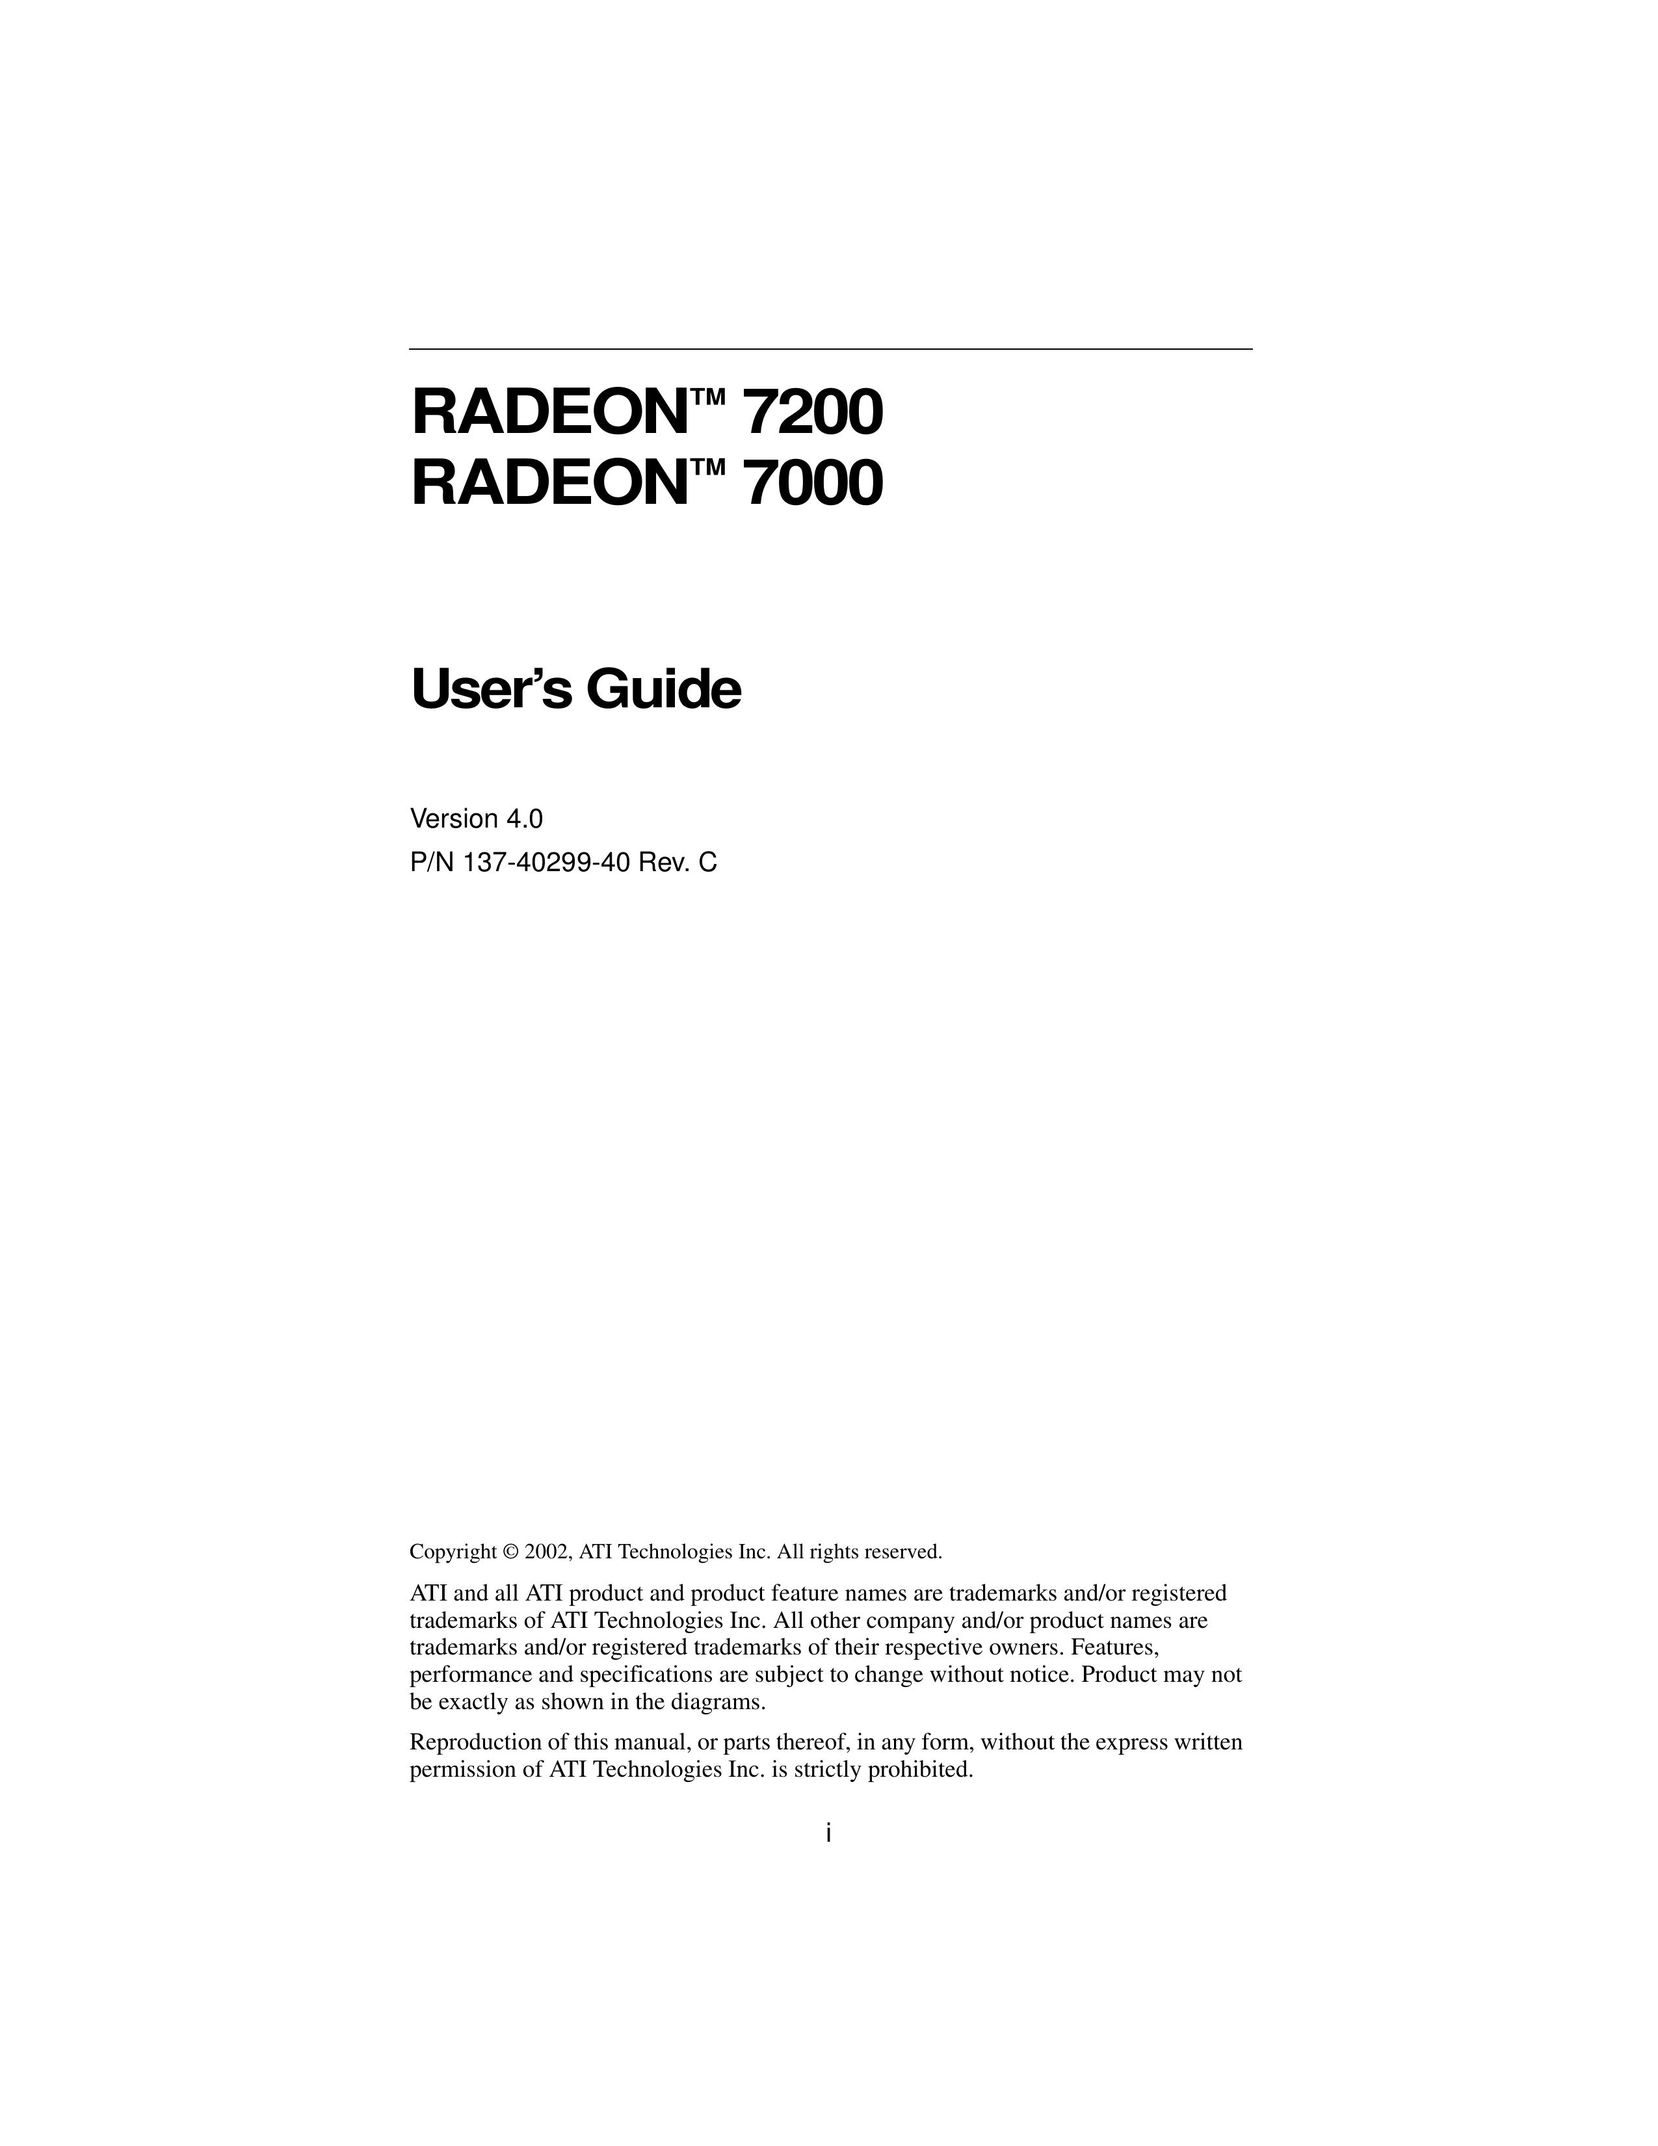 ATI Technologies 7200 Computer Hardware User Manual